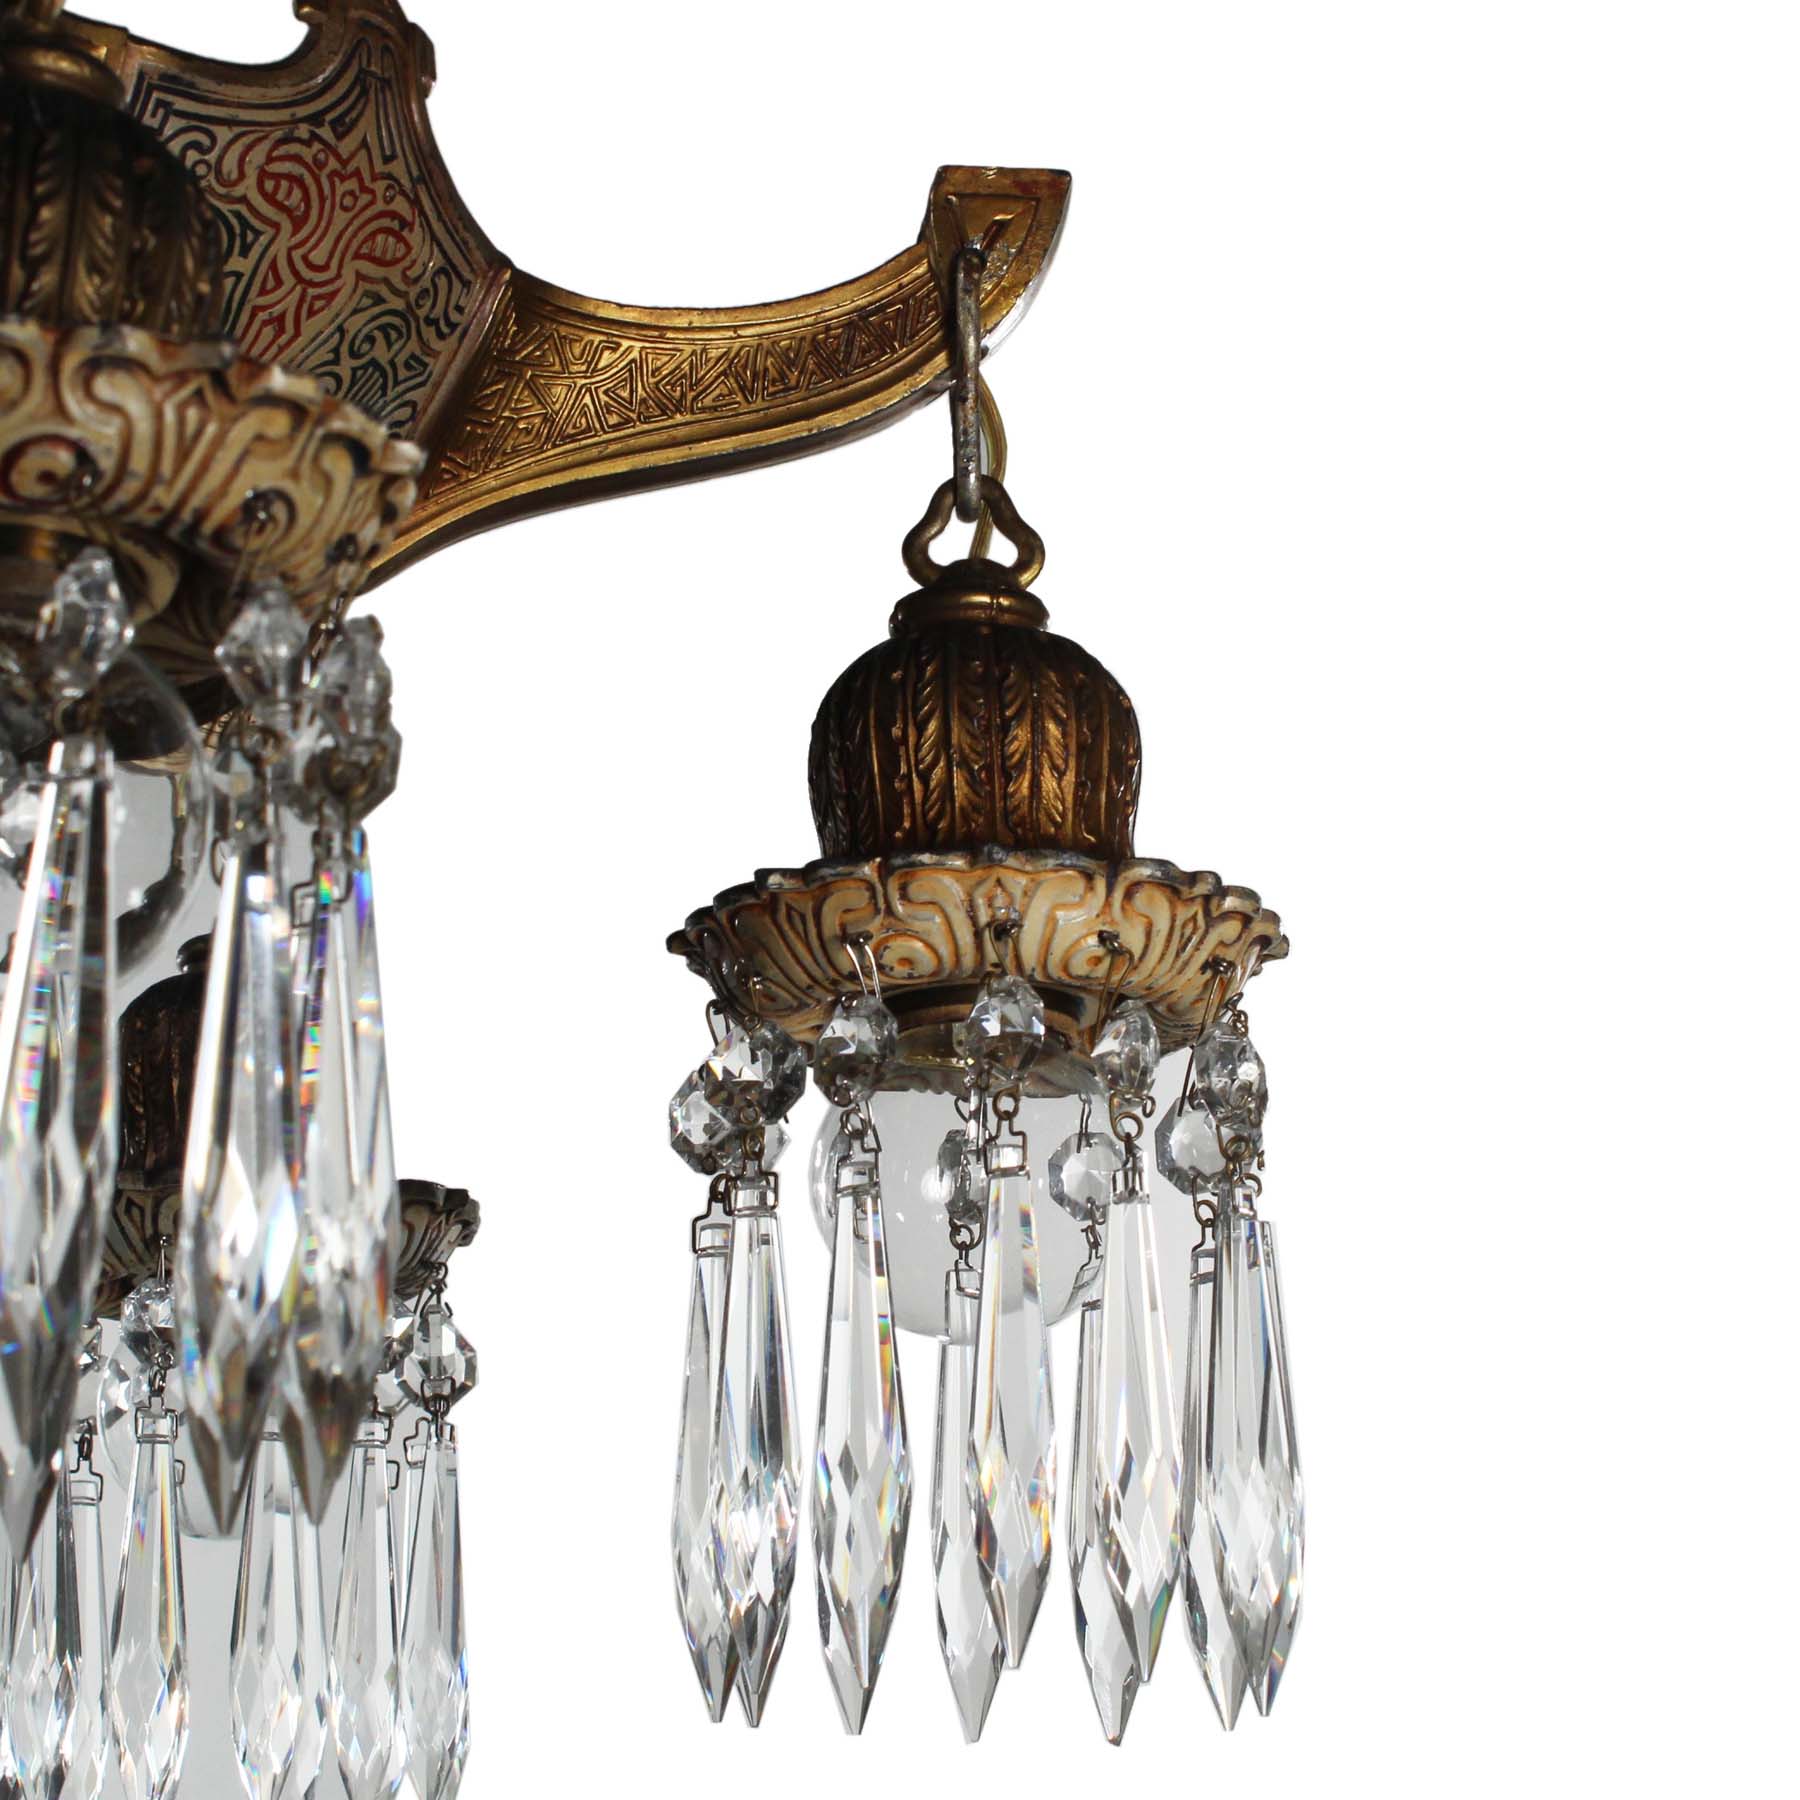 SOLD Antique Spanish Revival Chandelier, Empire Lighting-69985